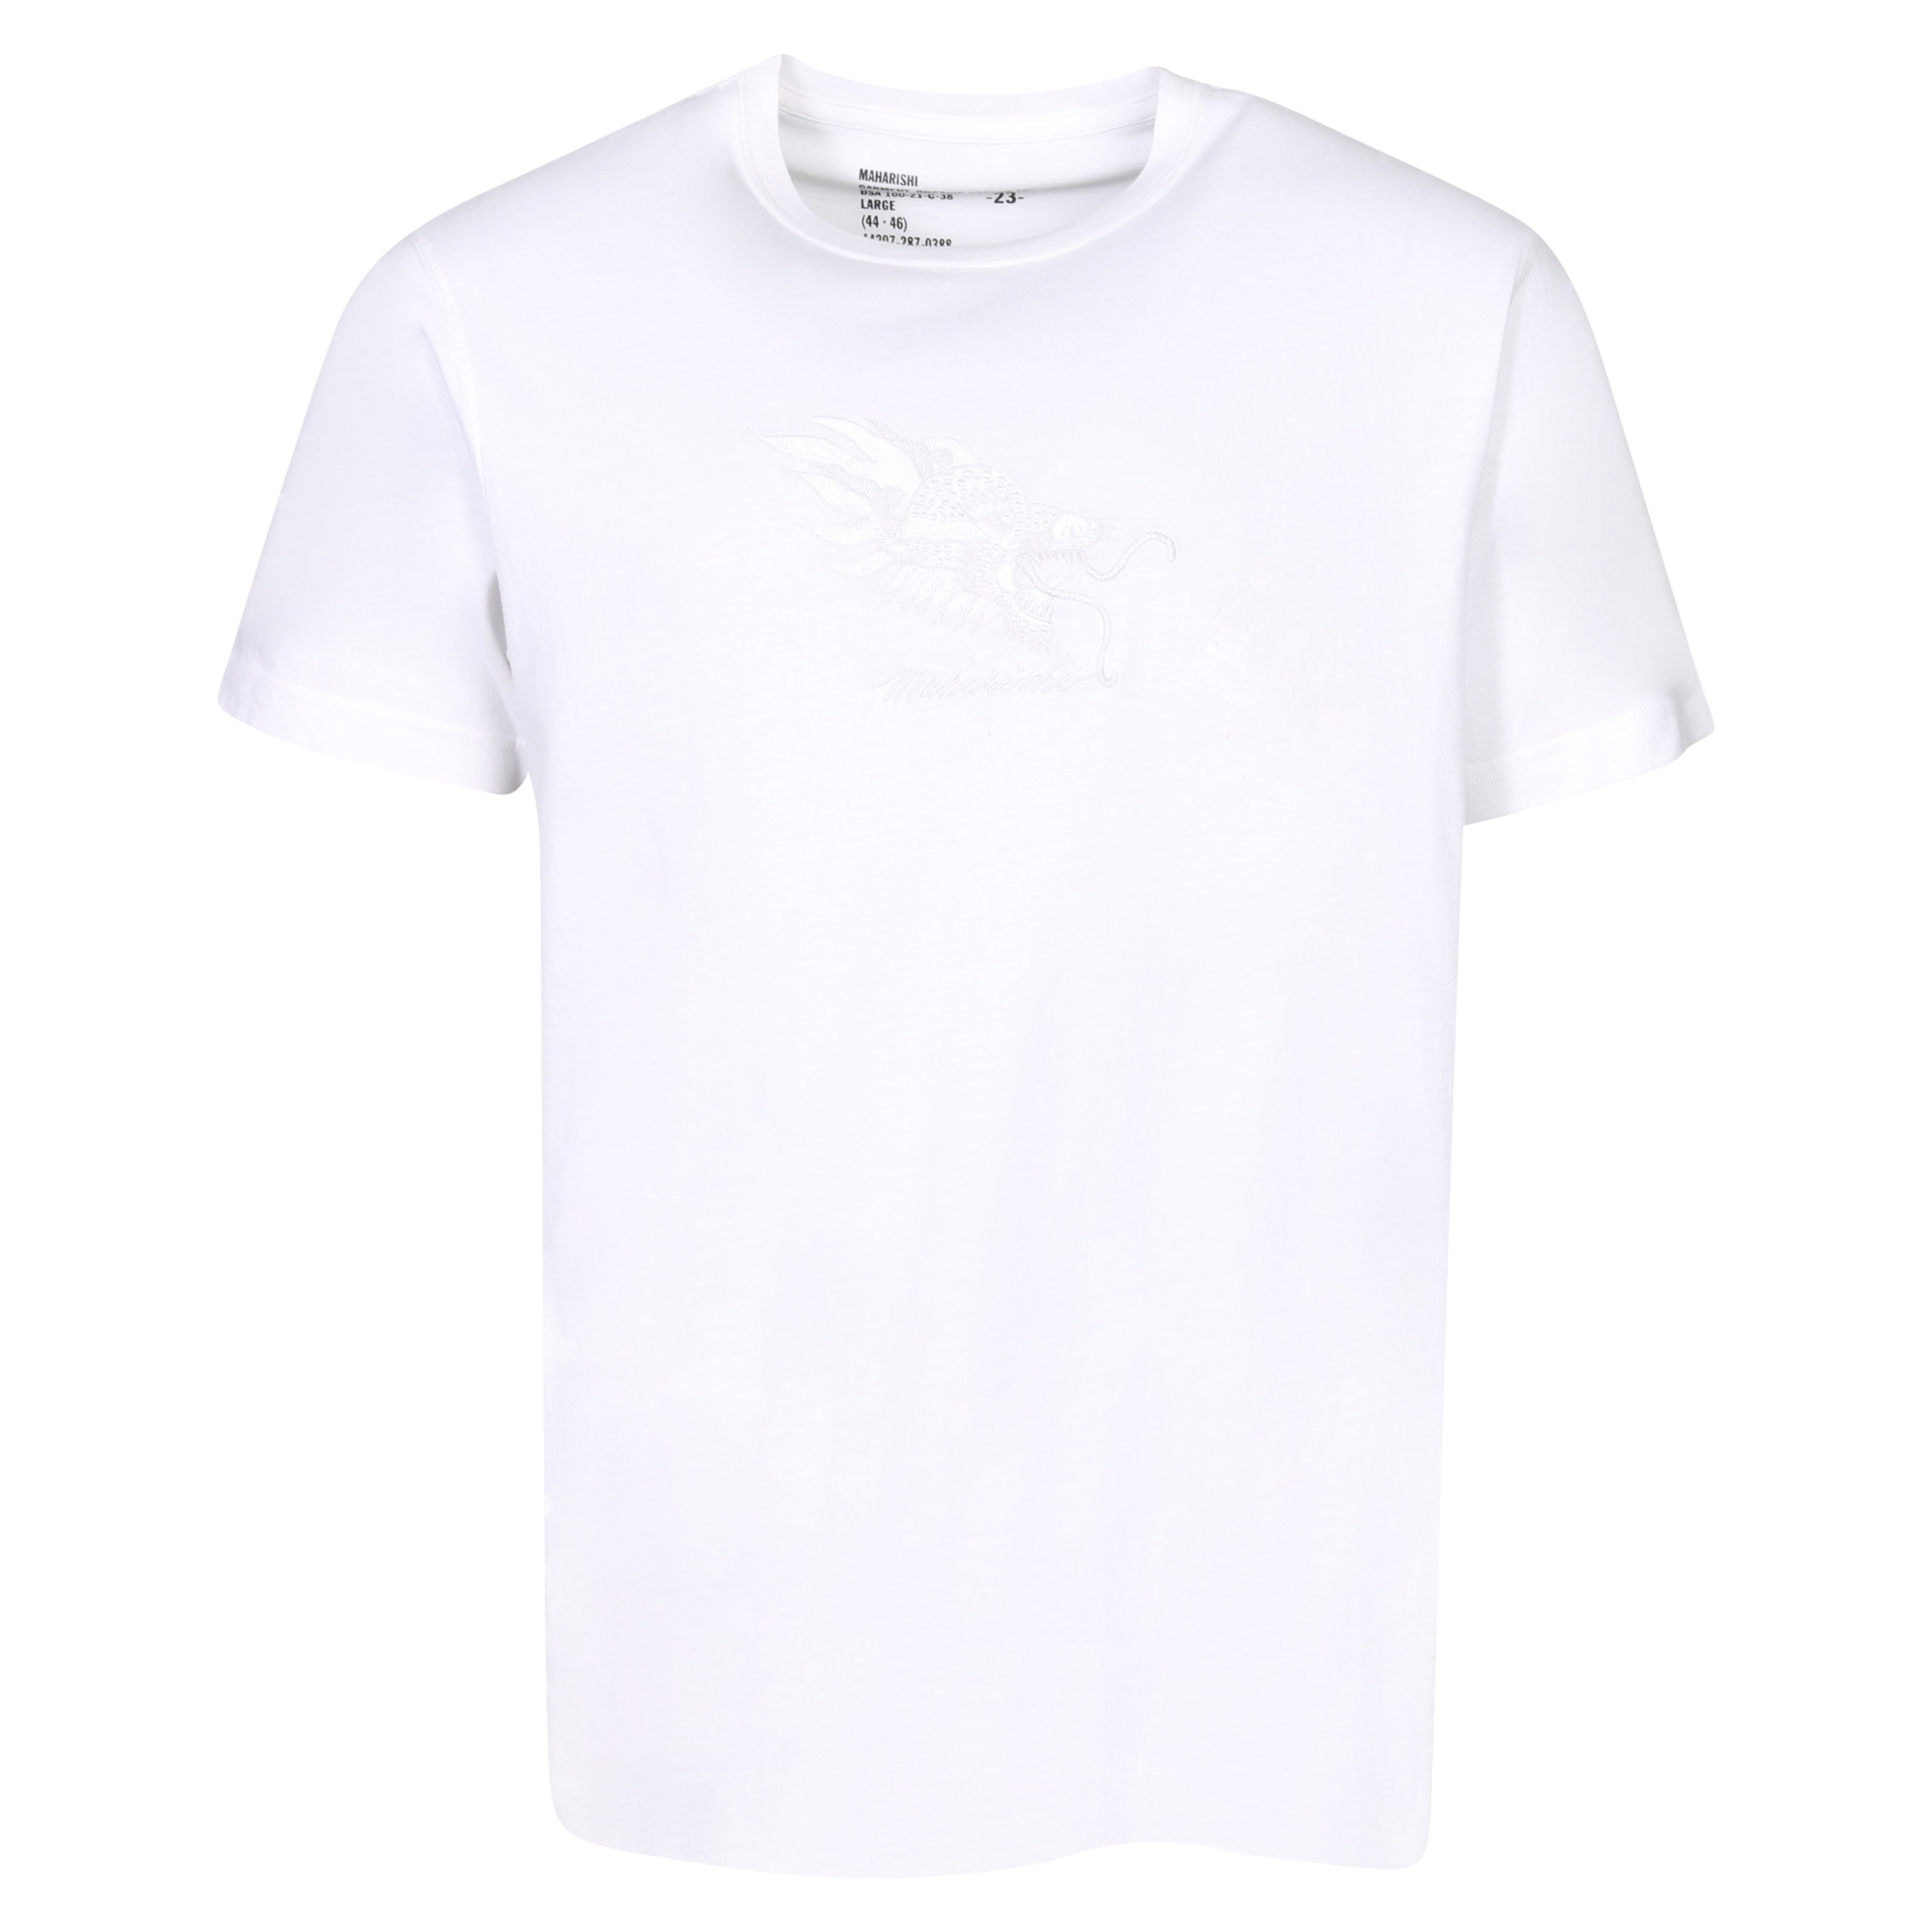 Maharishi Tibetan Dragon T-Shirt in White S